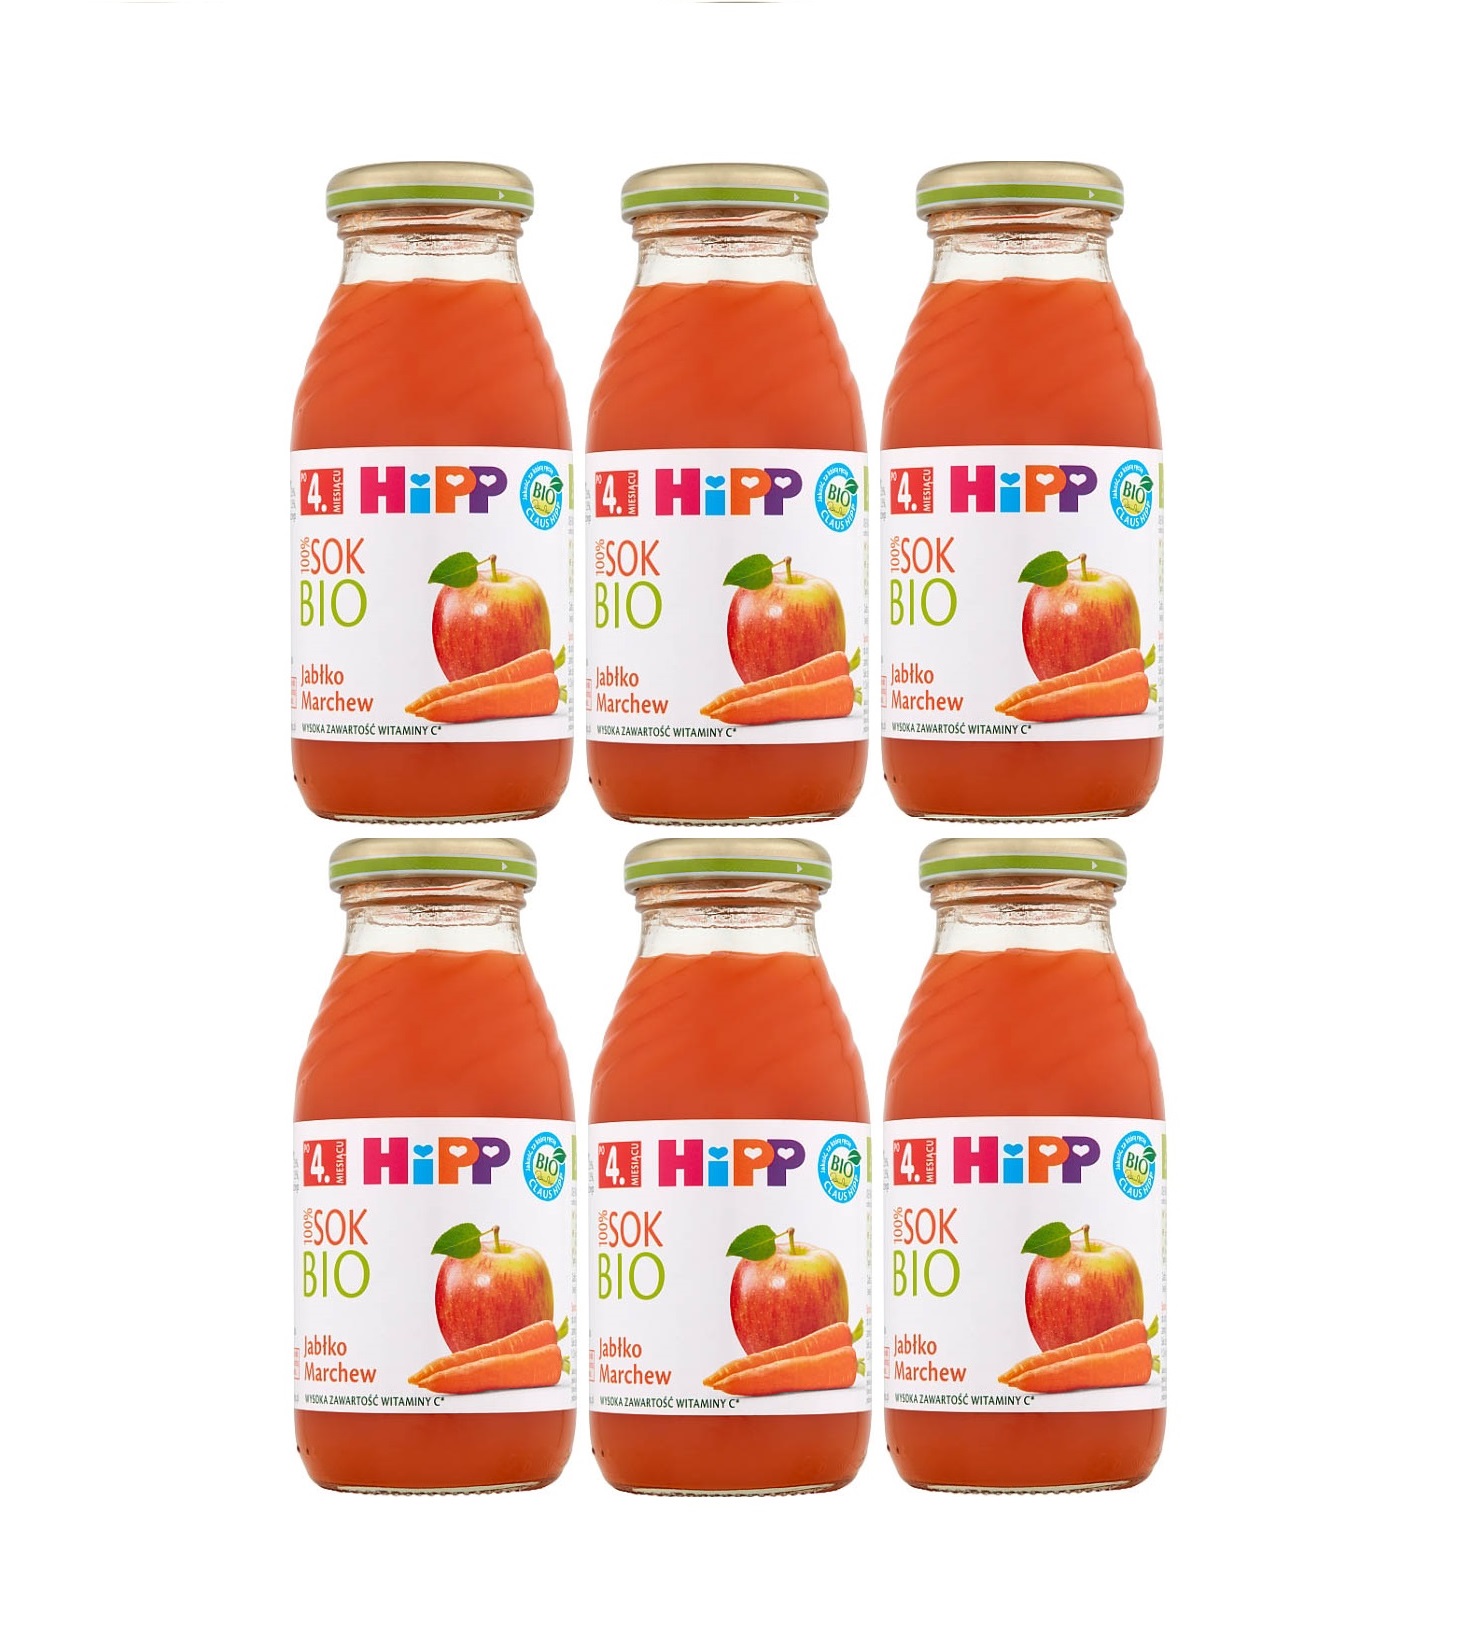 6 pack hipp 200ml sok jablko marchew